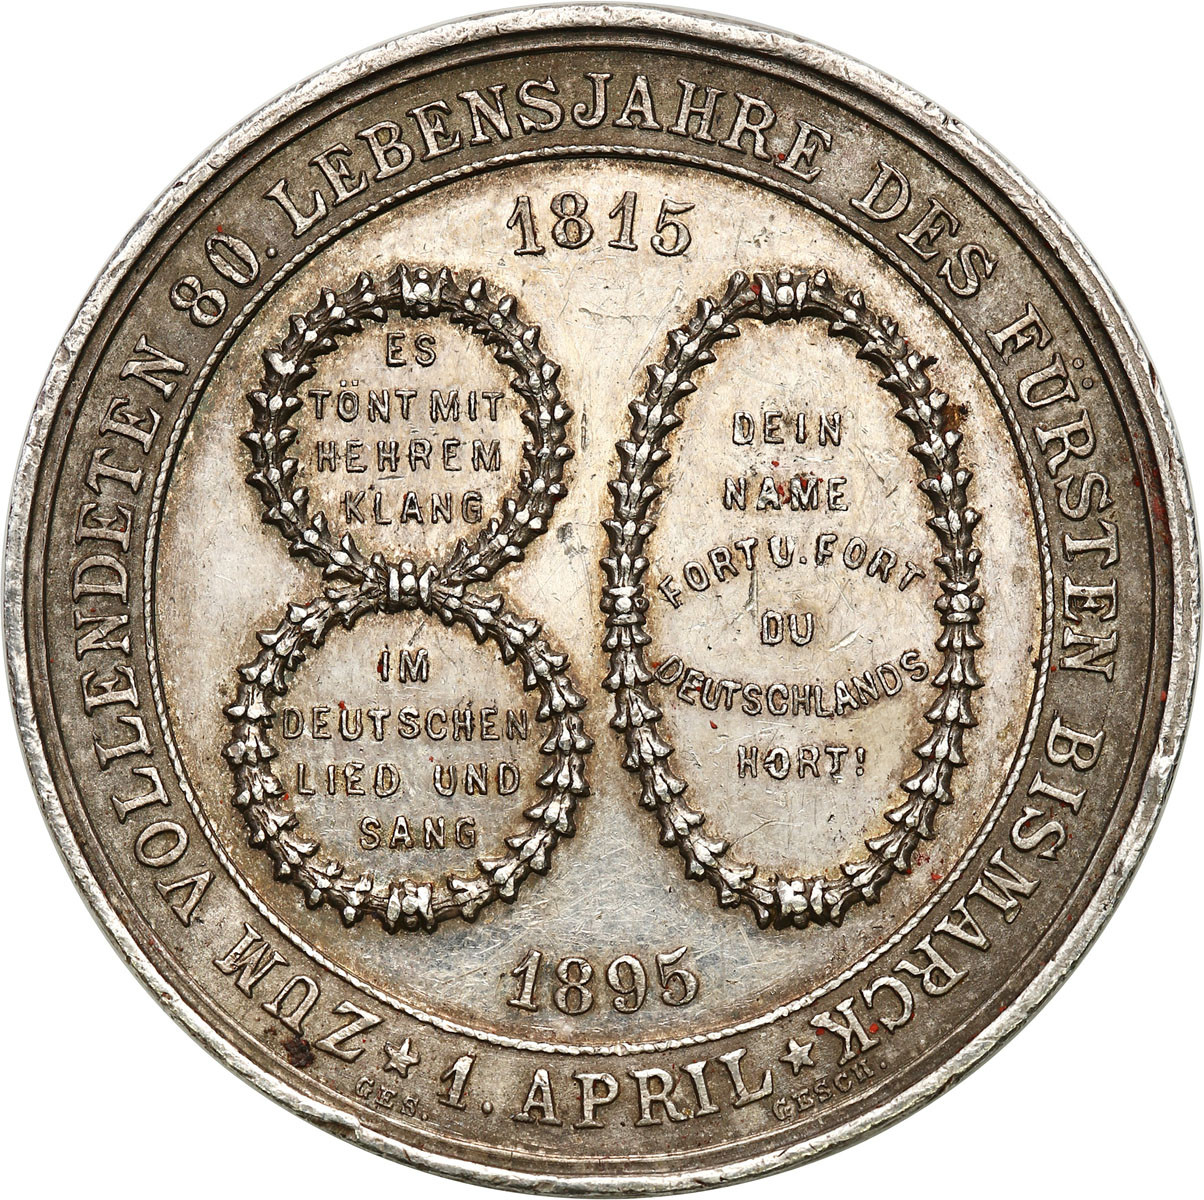 Niemcy. Medal 1895, 80 rocznica urodzin Otto von Bismarcka